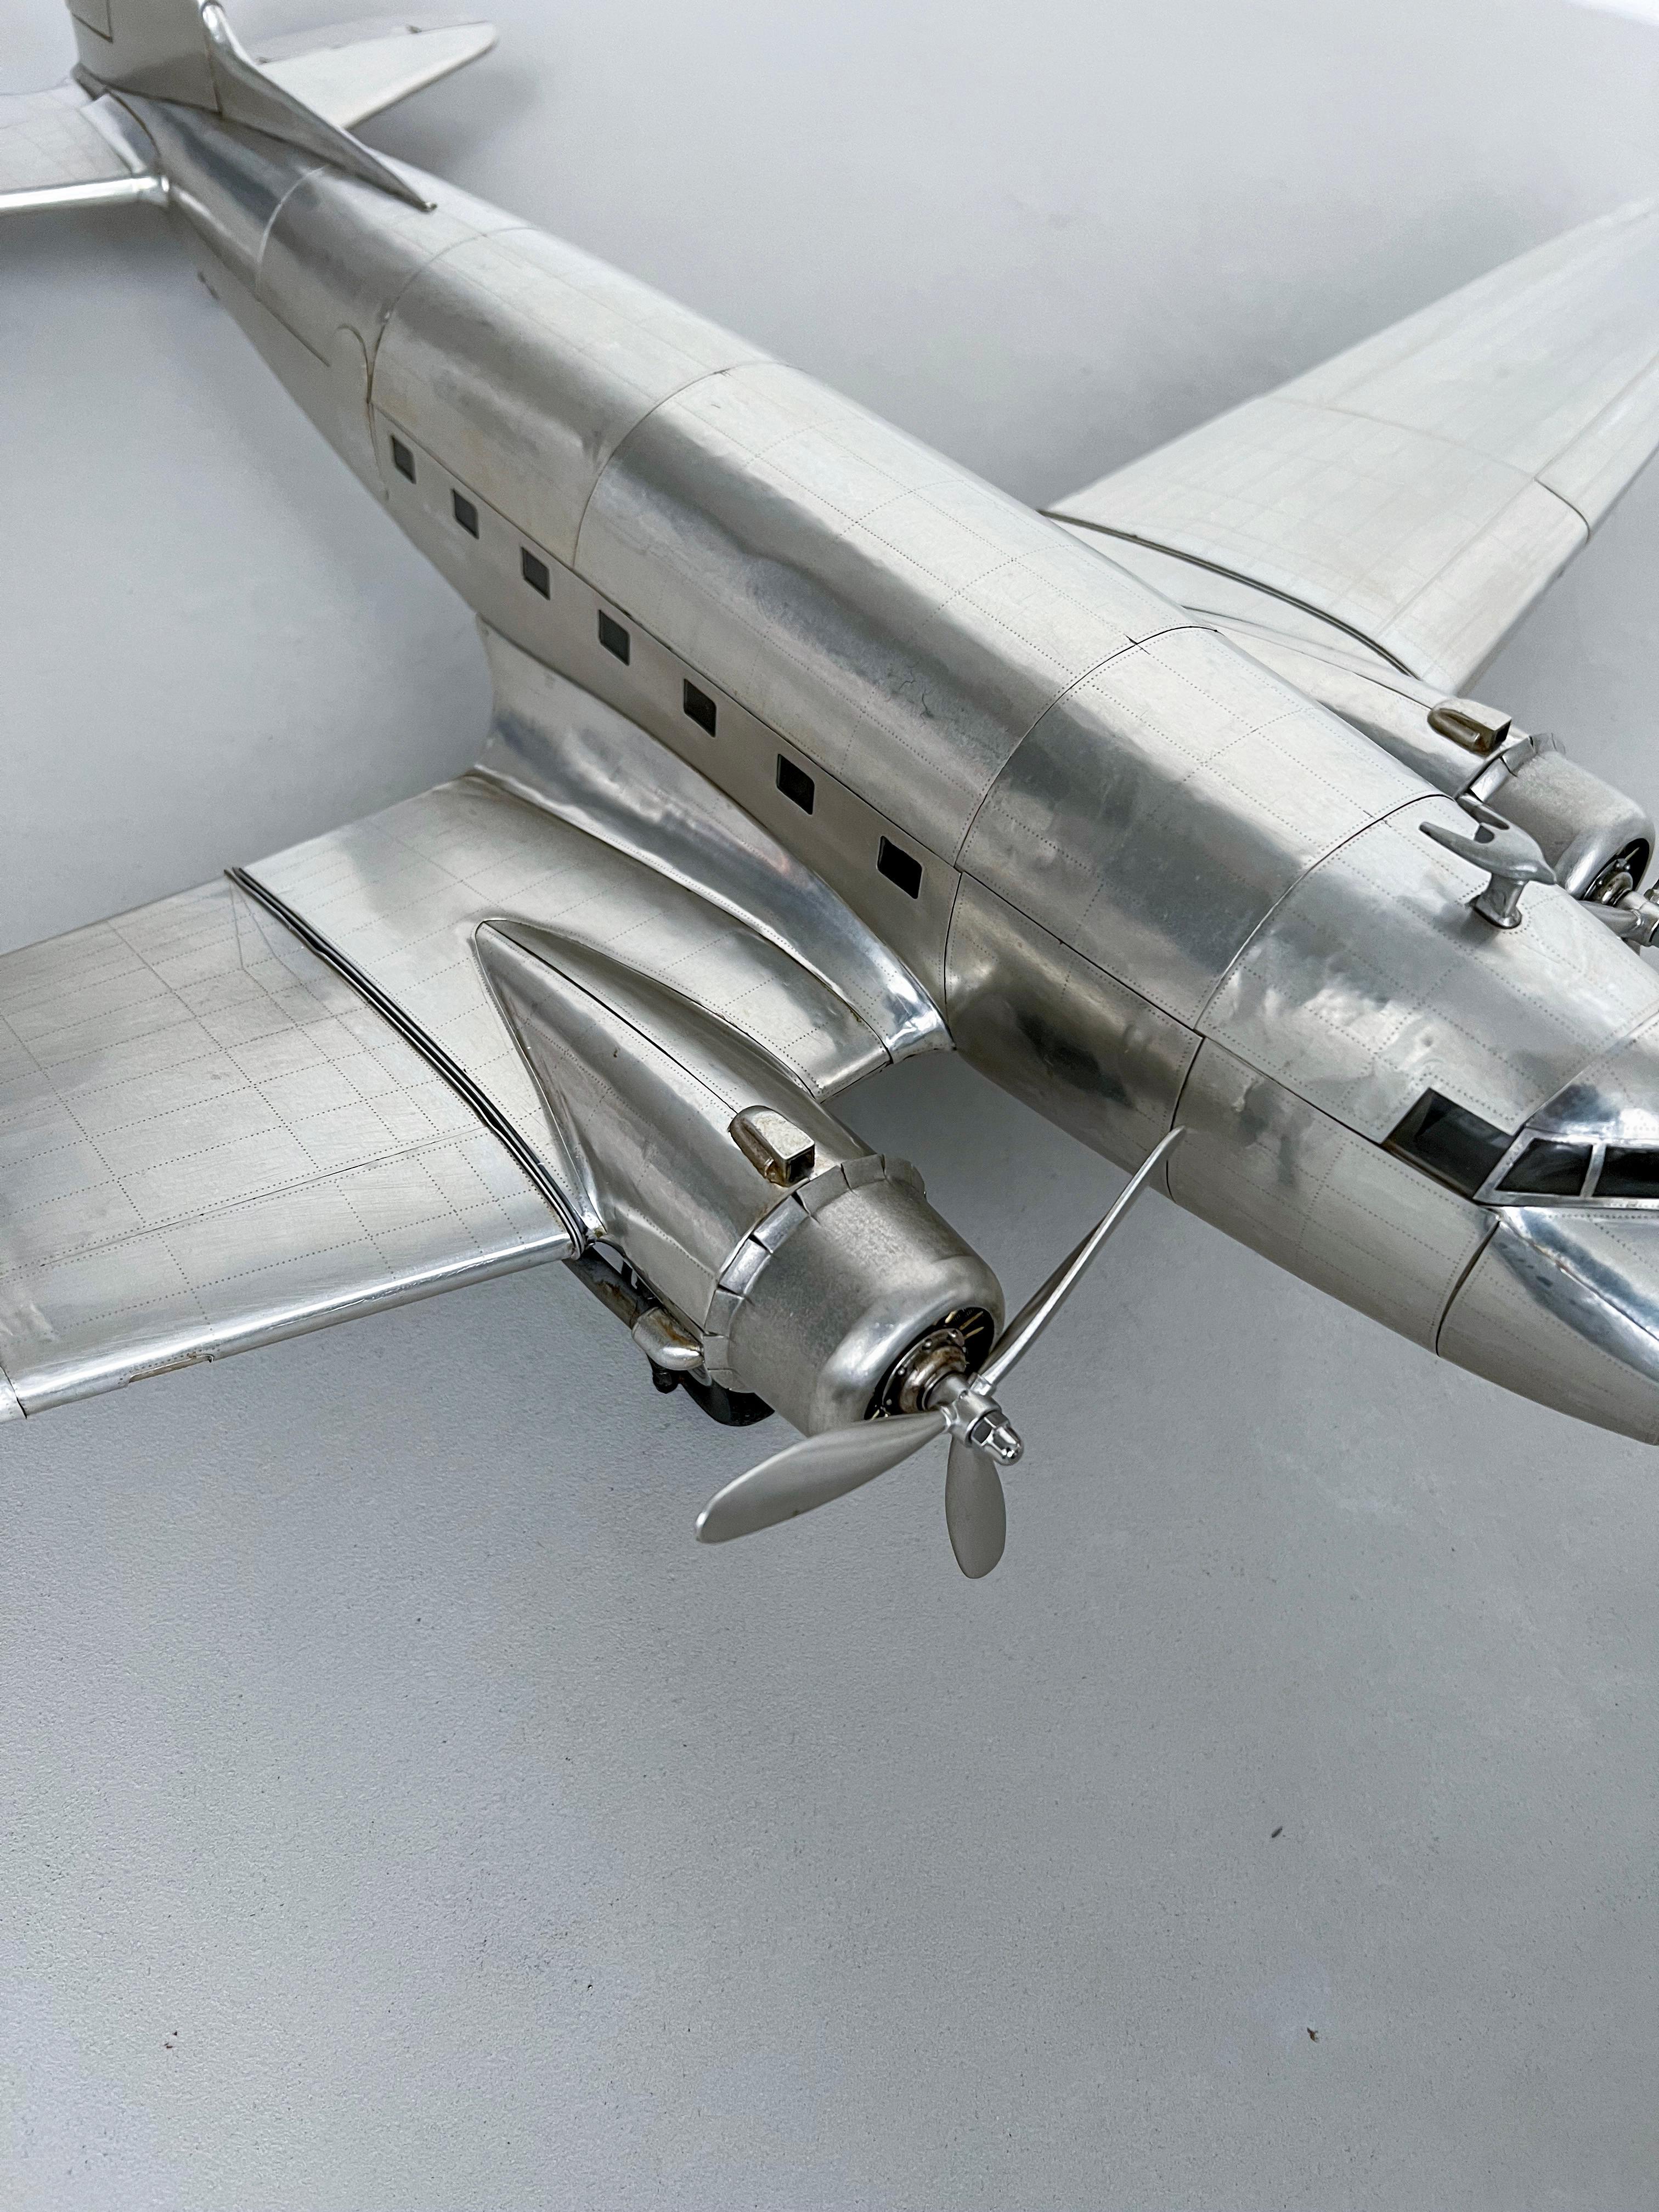 Douglas Dc-3 Aircraft Model, Big Size, Richly Detailed, Streamlined Metal Plane 3